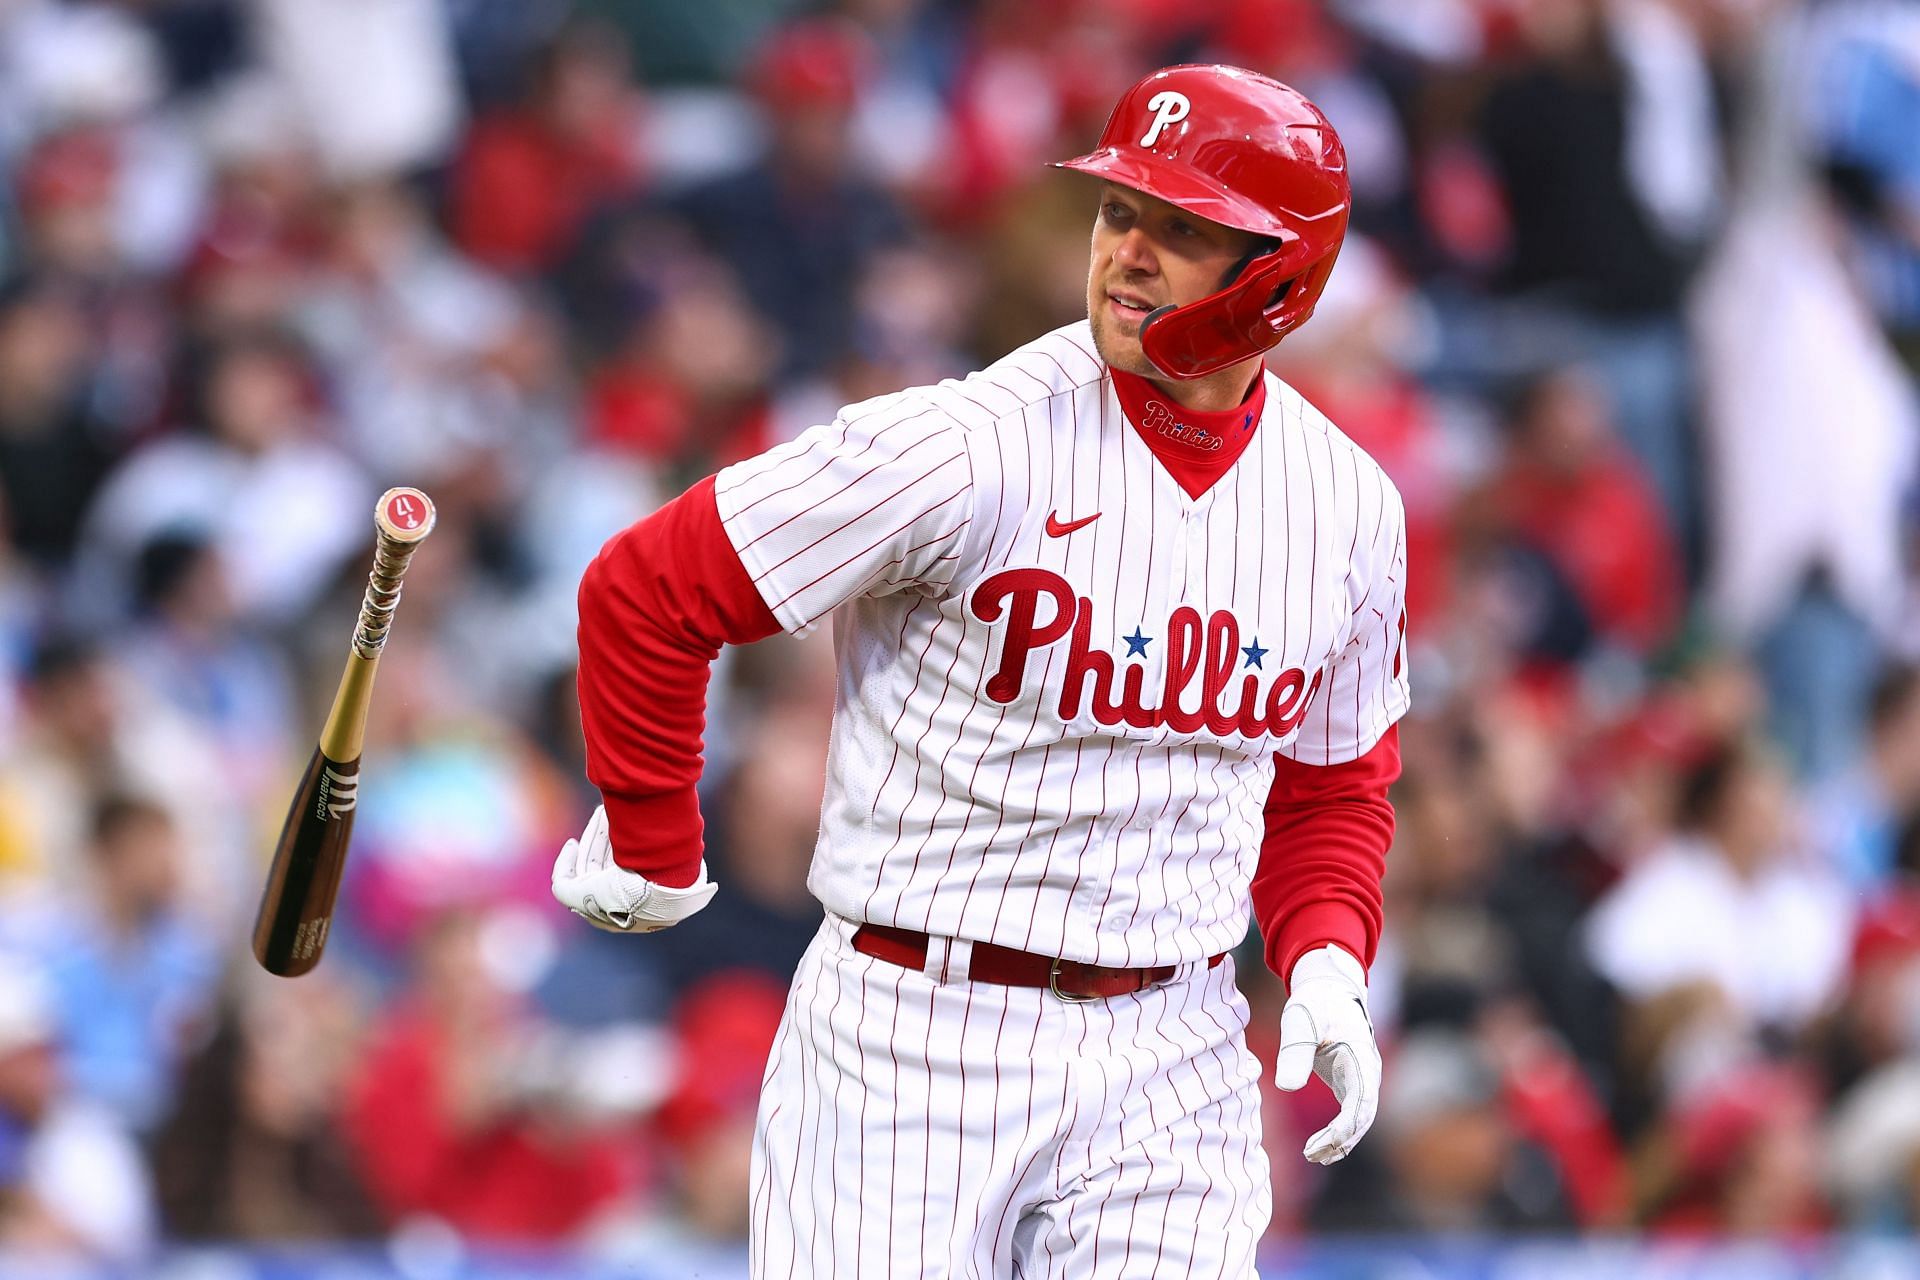 Watch Philadelphia Phillies first baseman Rhys Hoskins blasts a home